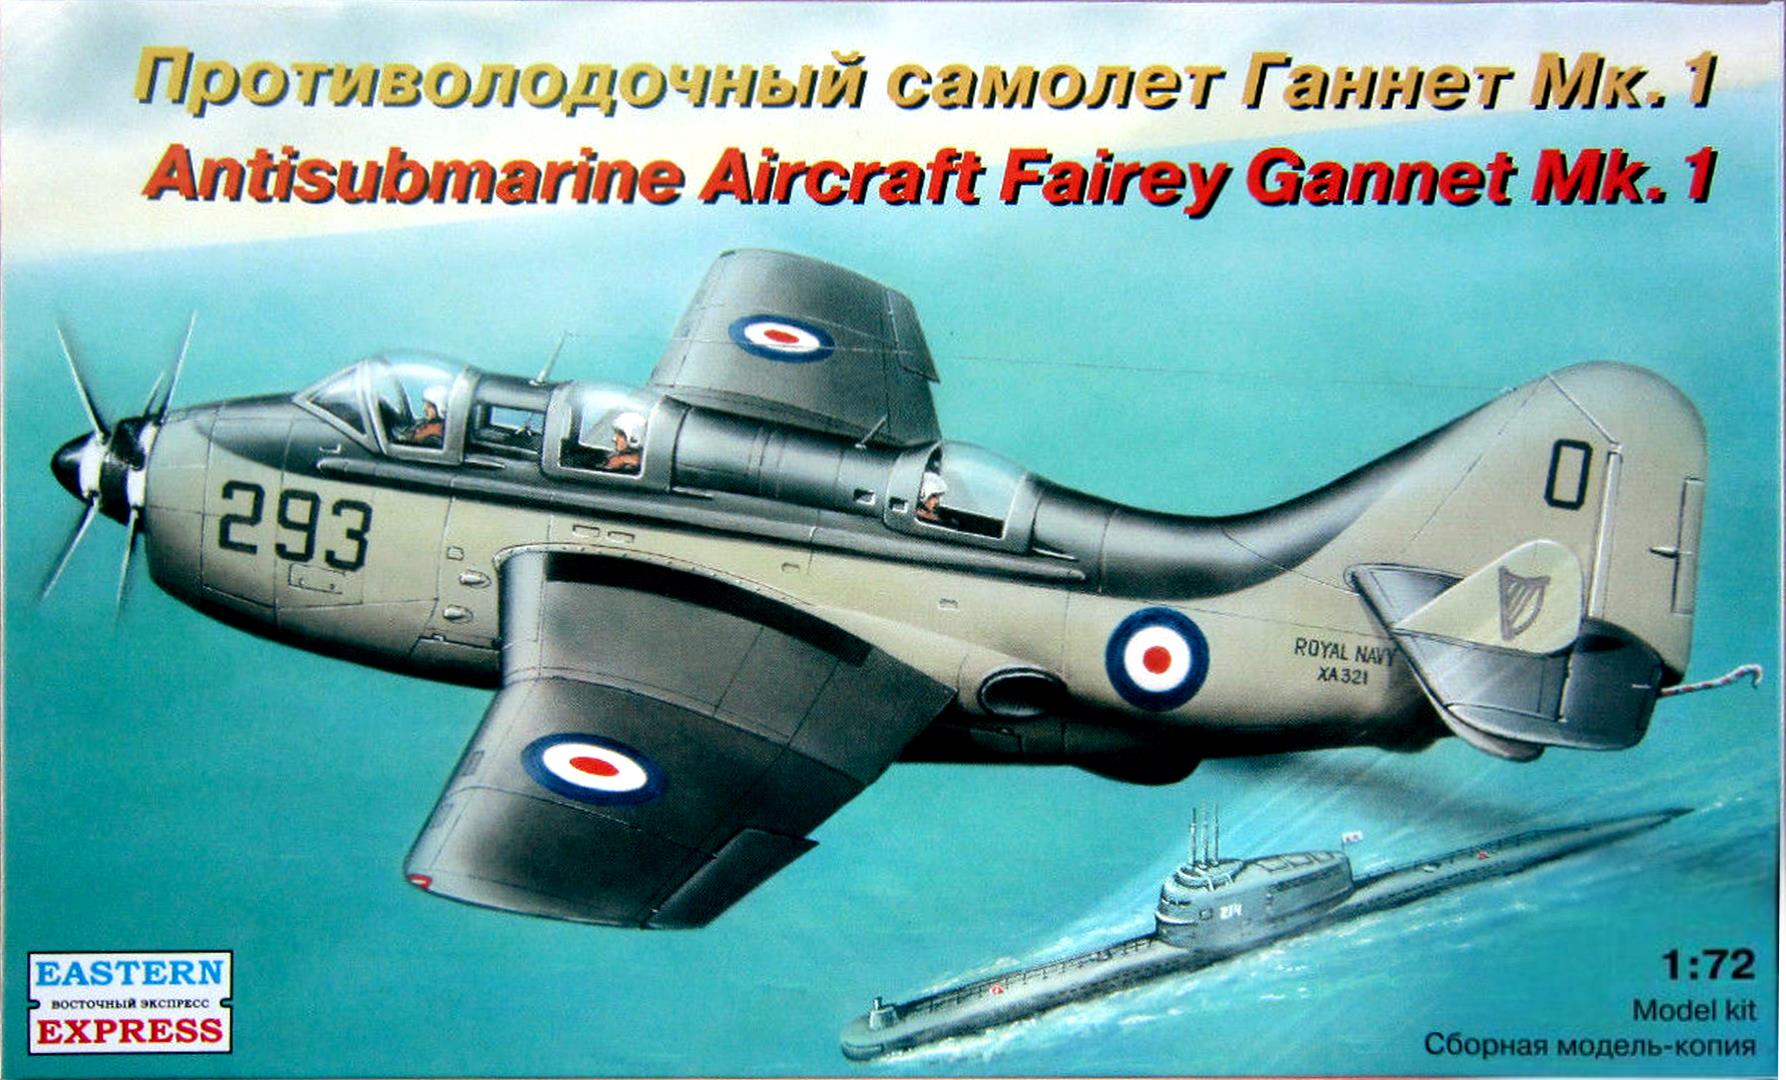  Верх коробки Eastern Express 72266 Antisubmarine Aircraft Fairey Gannet Mk.1